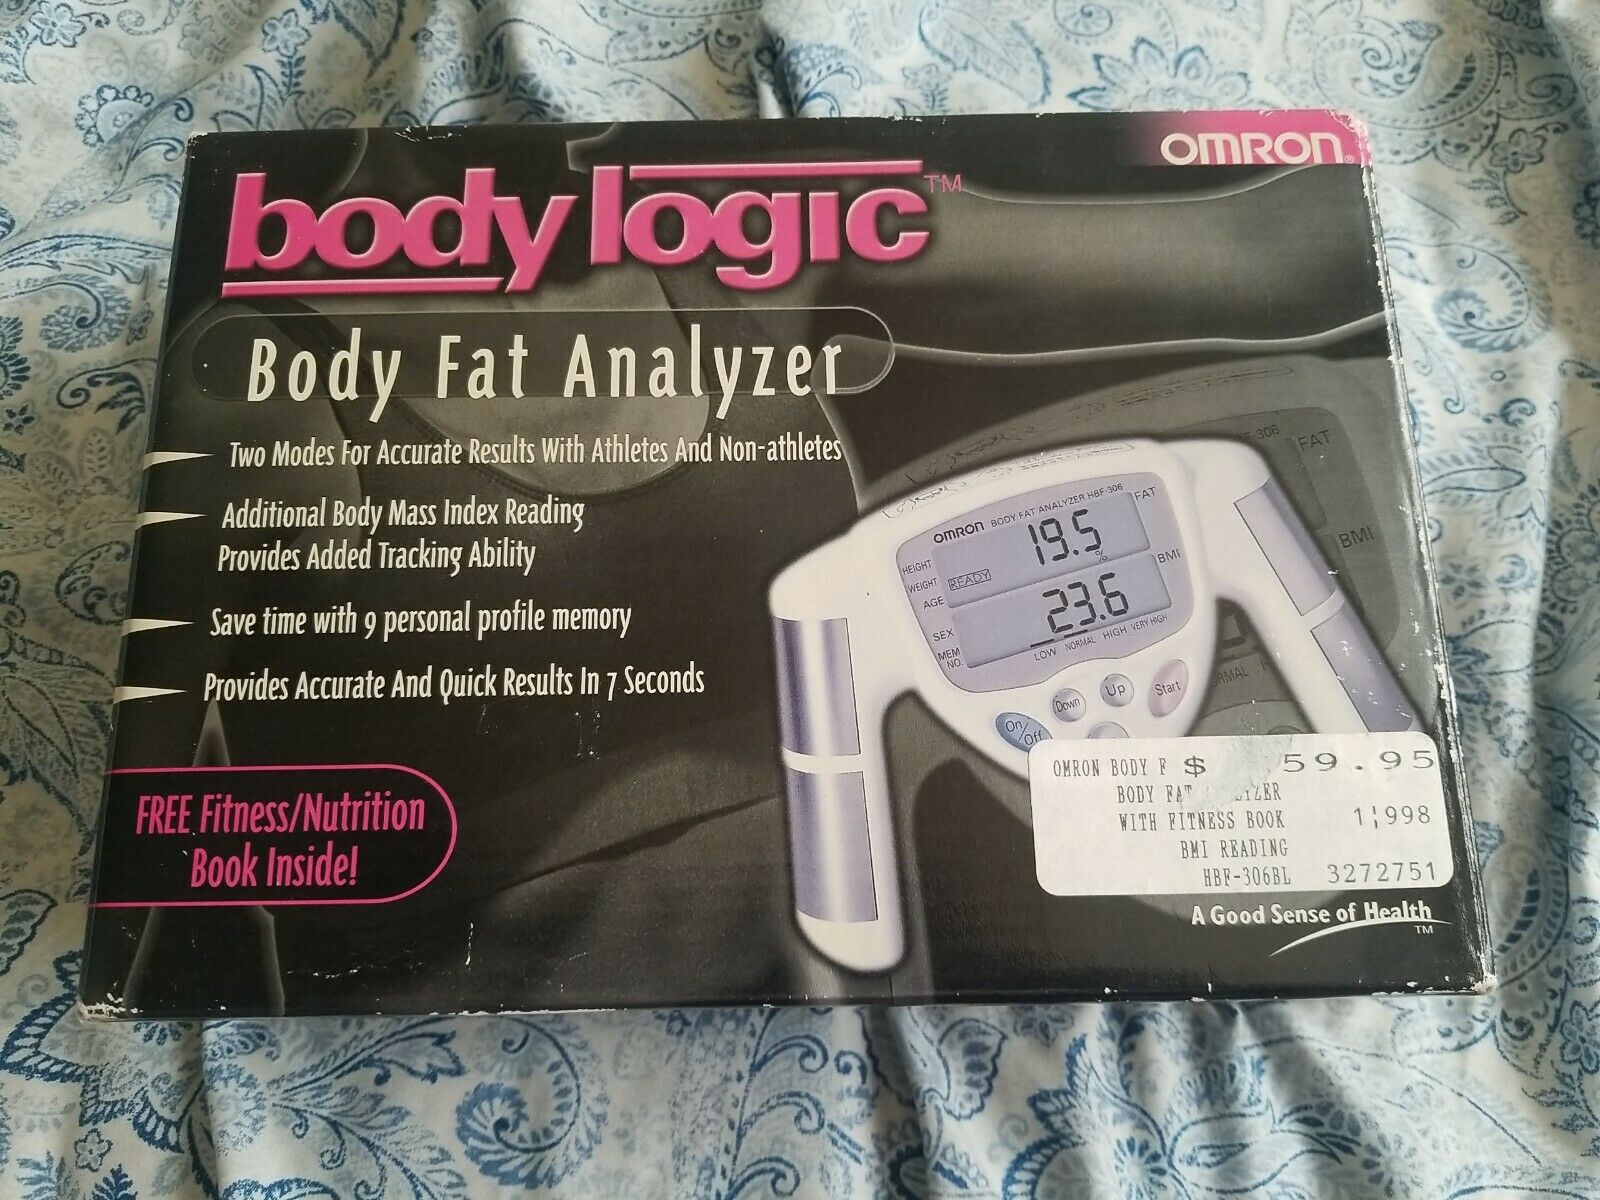 Omron Hbf-306bl Body Logic Handheld Body Fat Analyzer Bmi Measurement Calculator